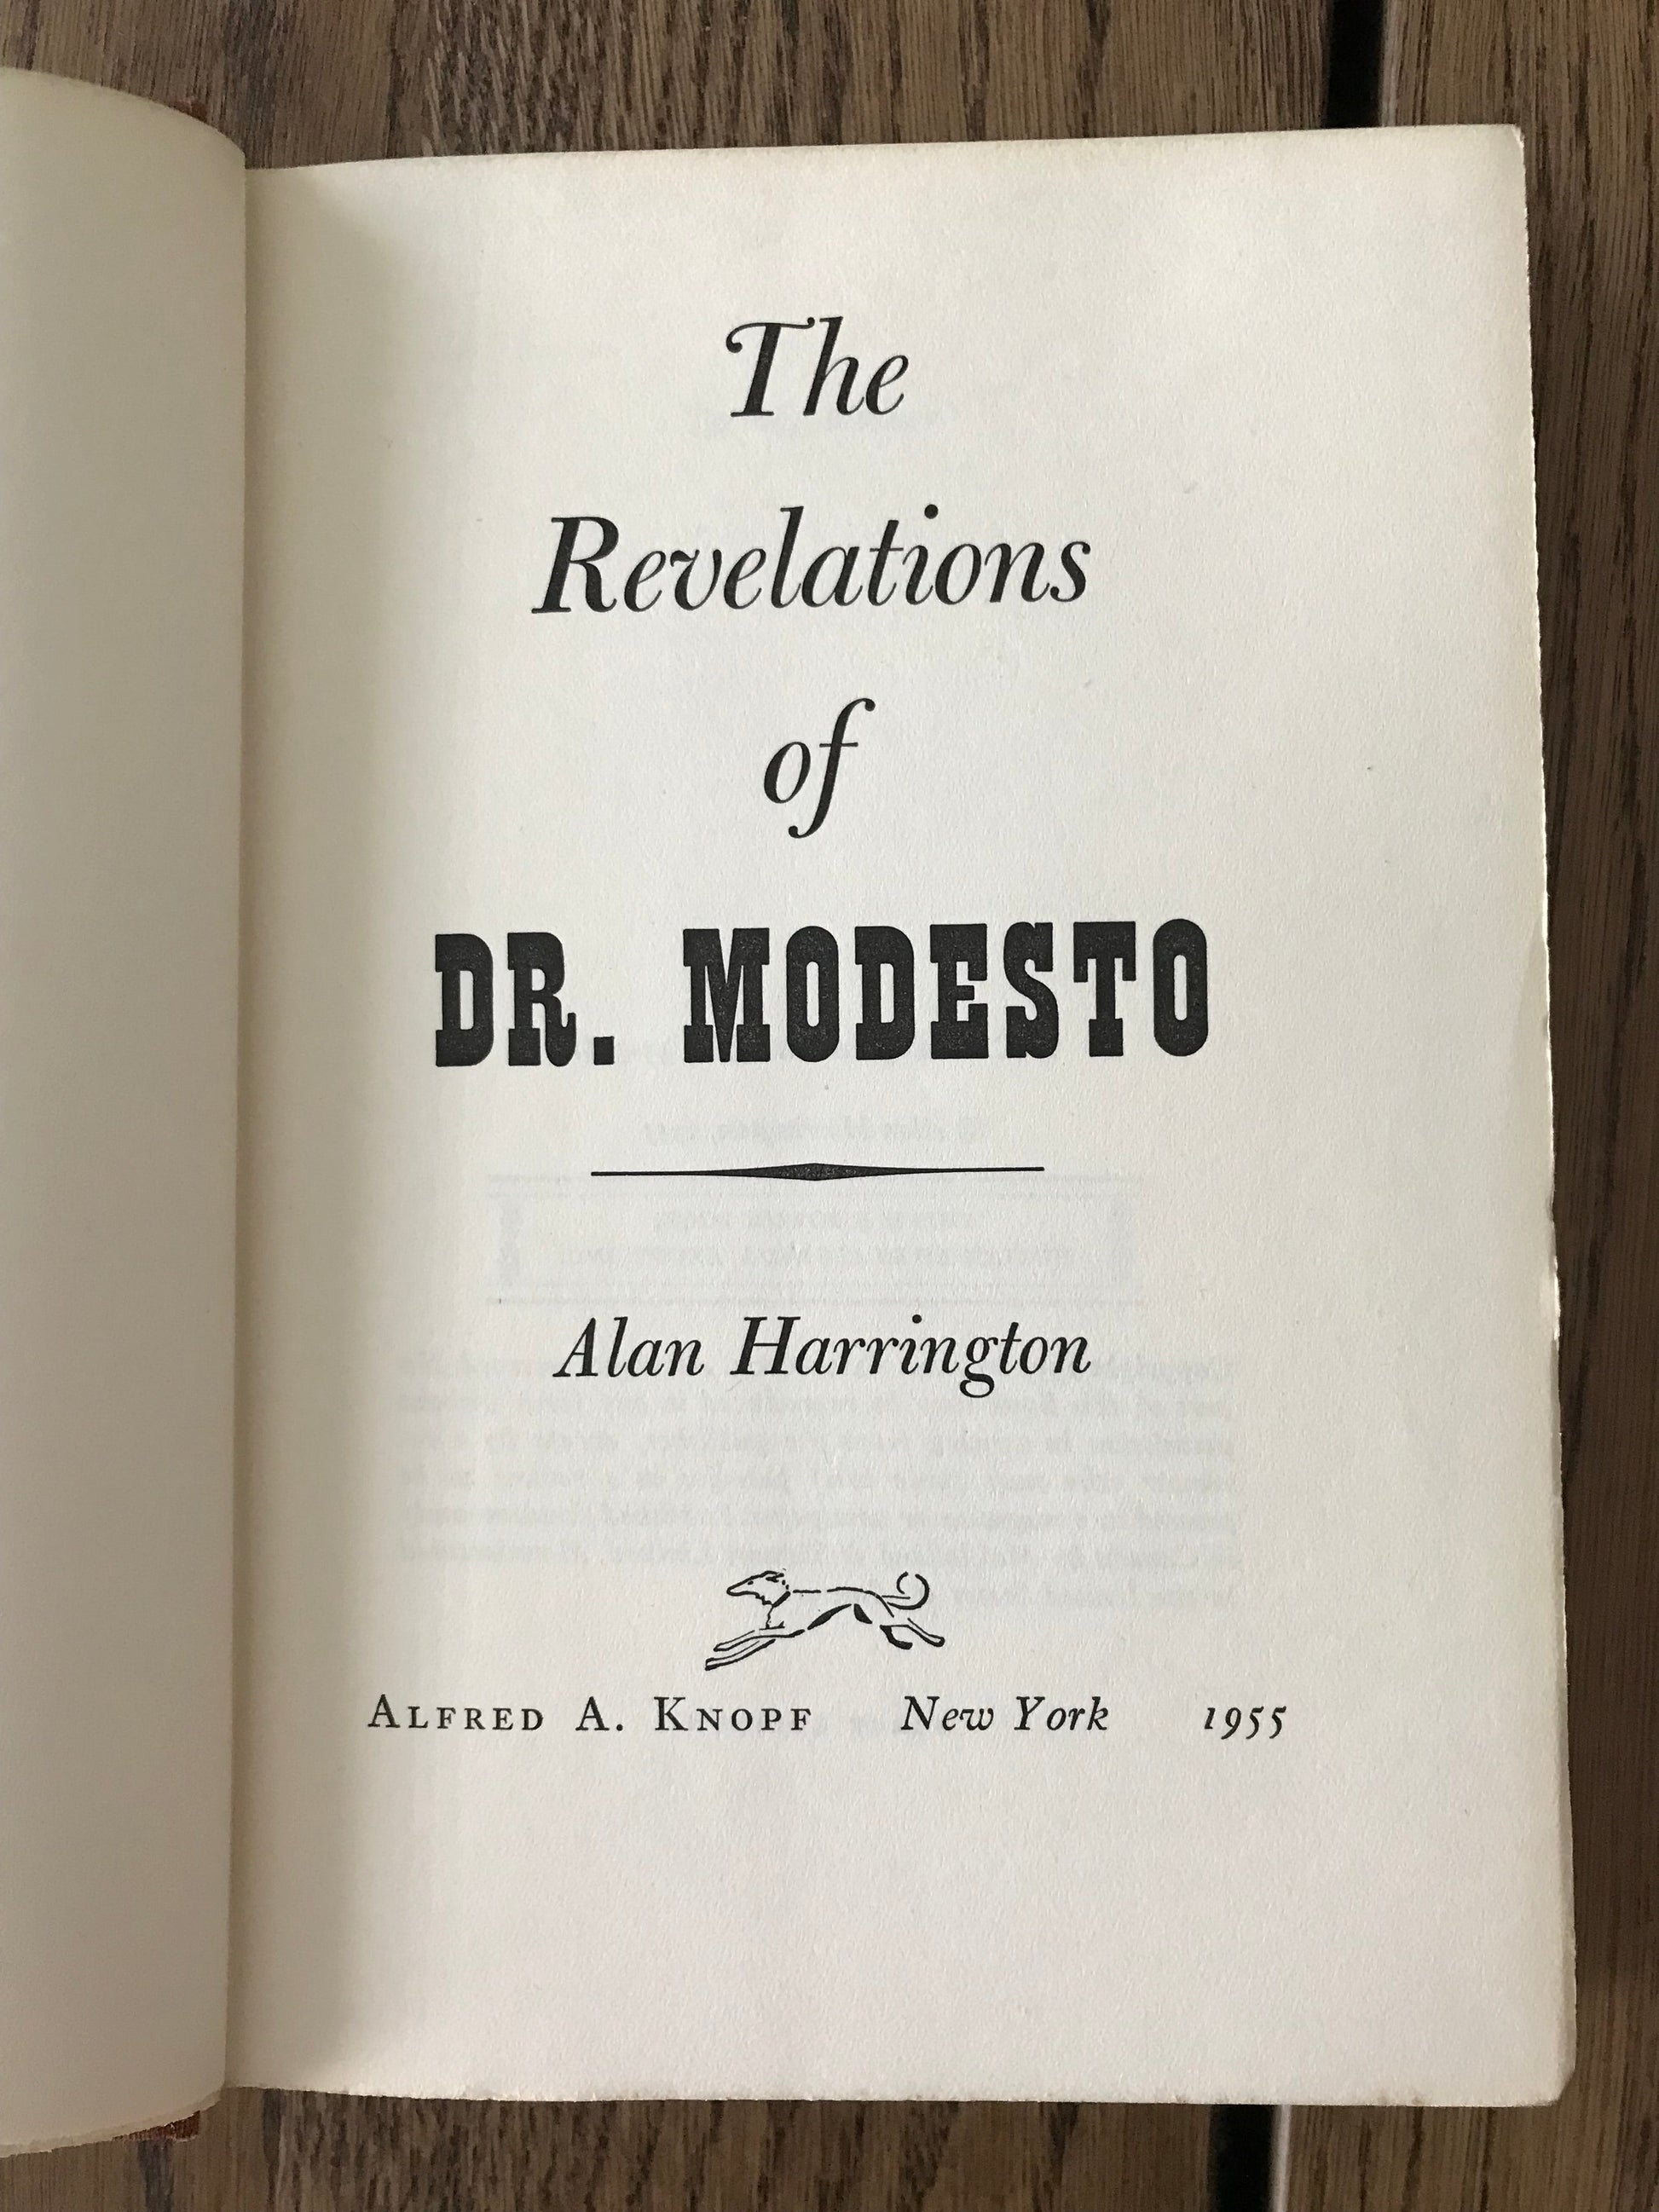 THE REVELATIONS OF DR. MODESTO -  ALAN HARRINGTON BooksCardsNBikes